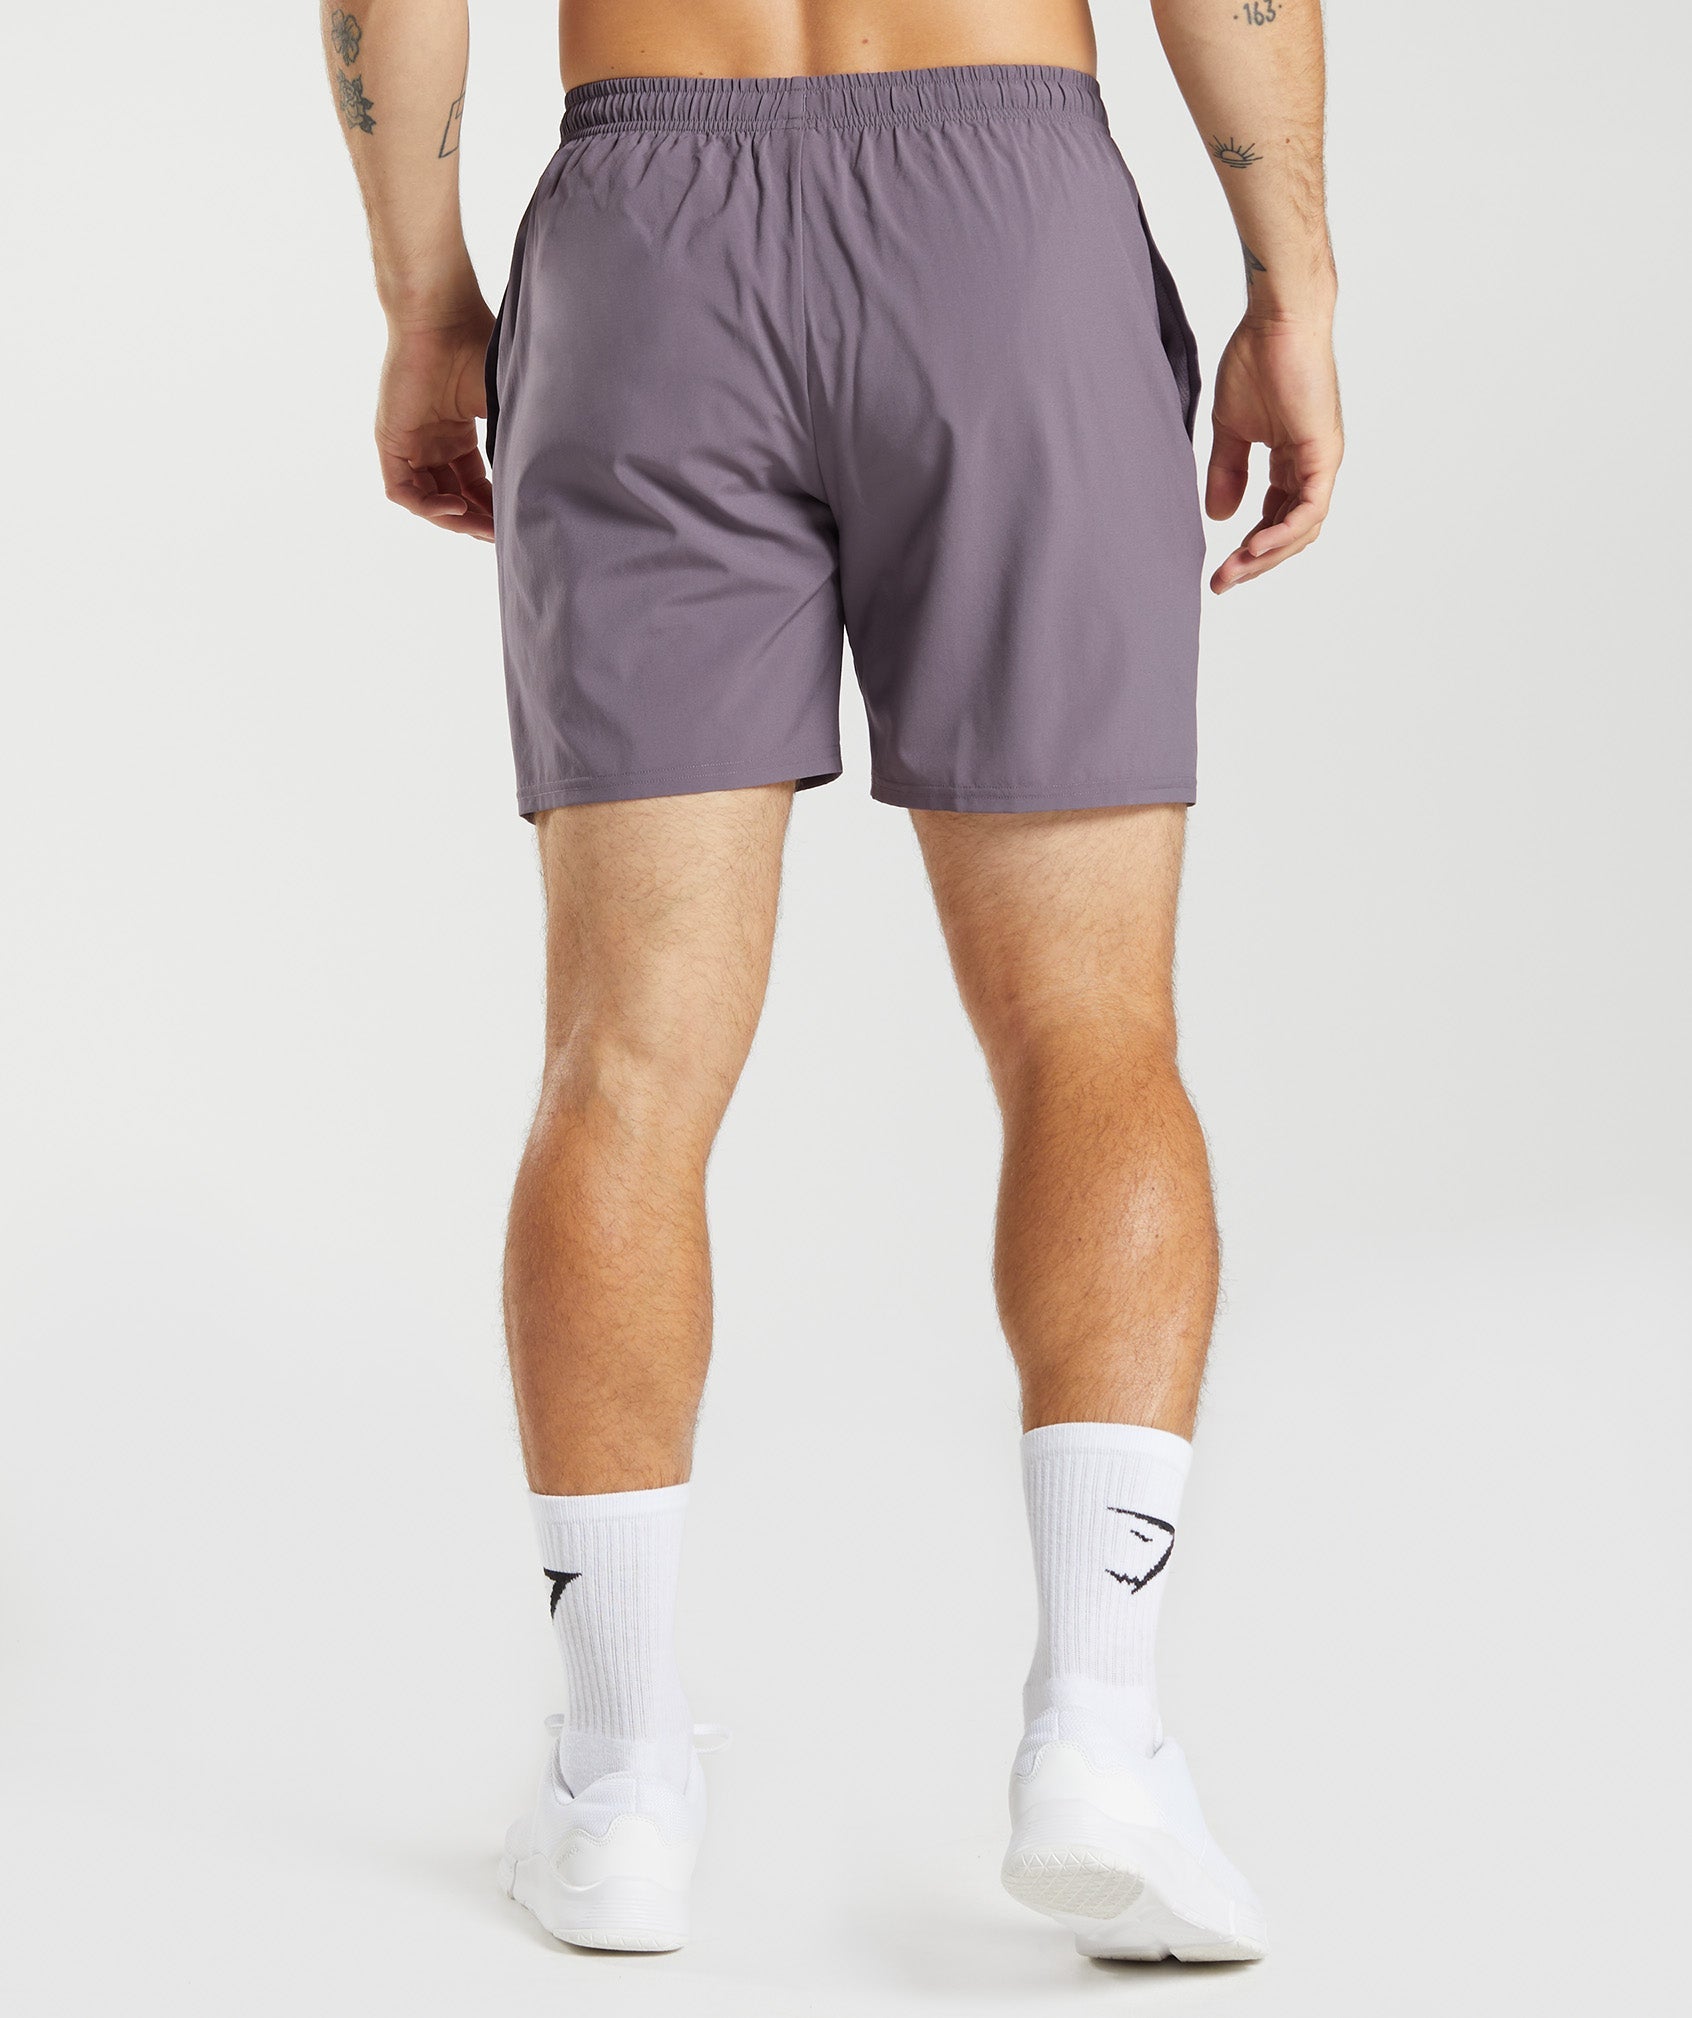 Gymshark Arrival 5 Shorts - Musk Lilac